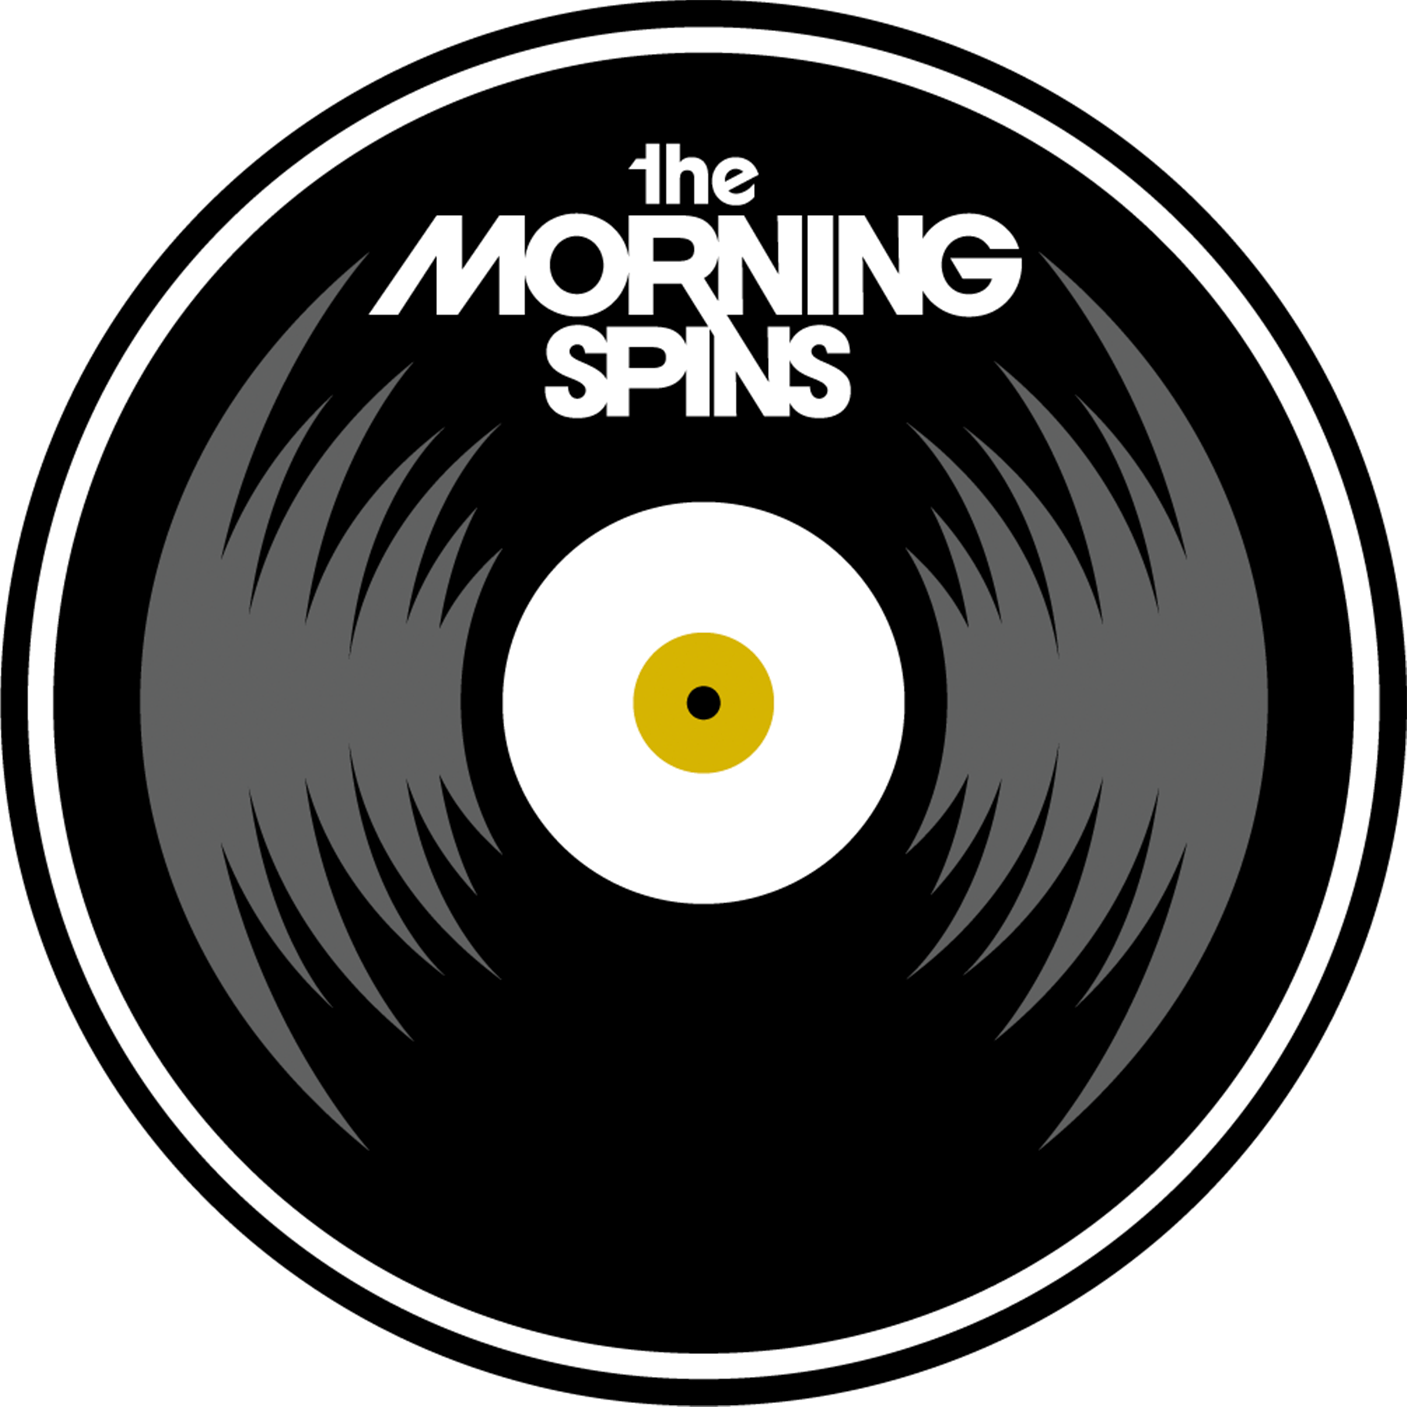 The Morning Spins record logo spinning